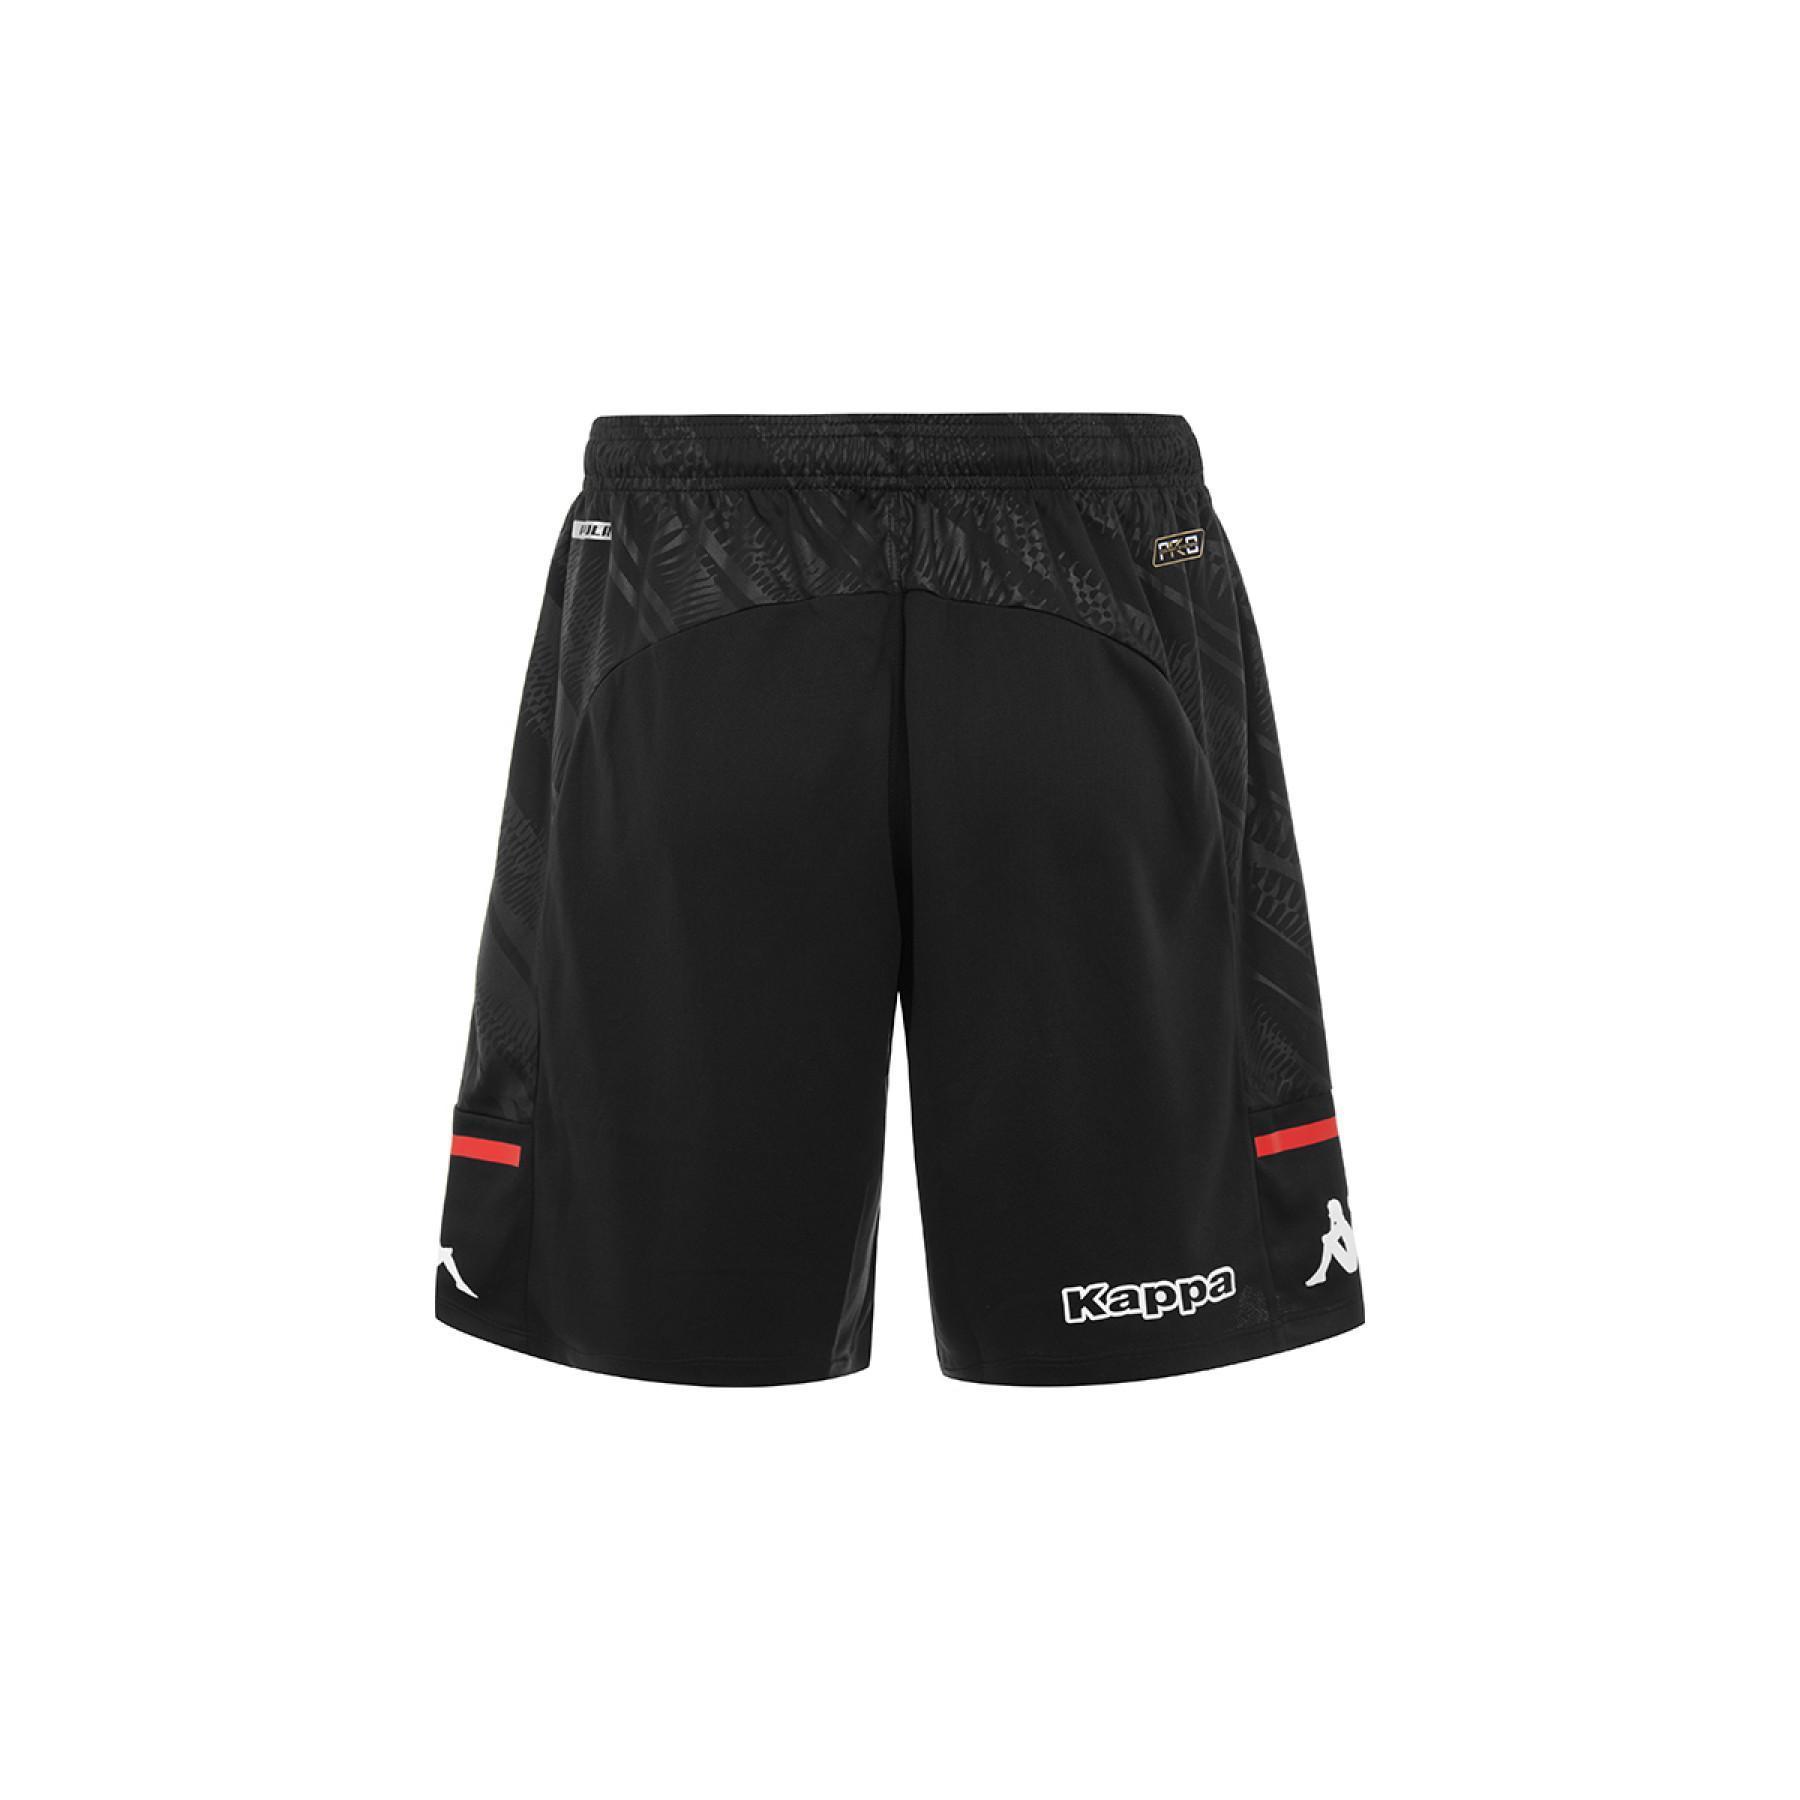 Children's shorts AS Monaco 2020/21 ahorazip pro 4